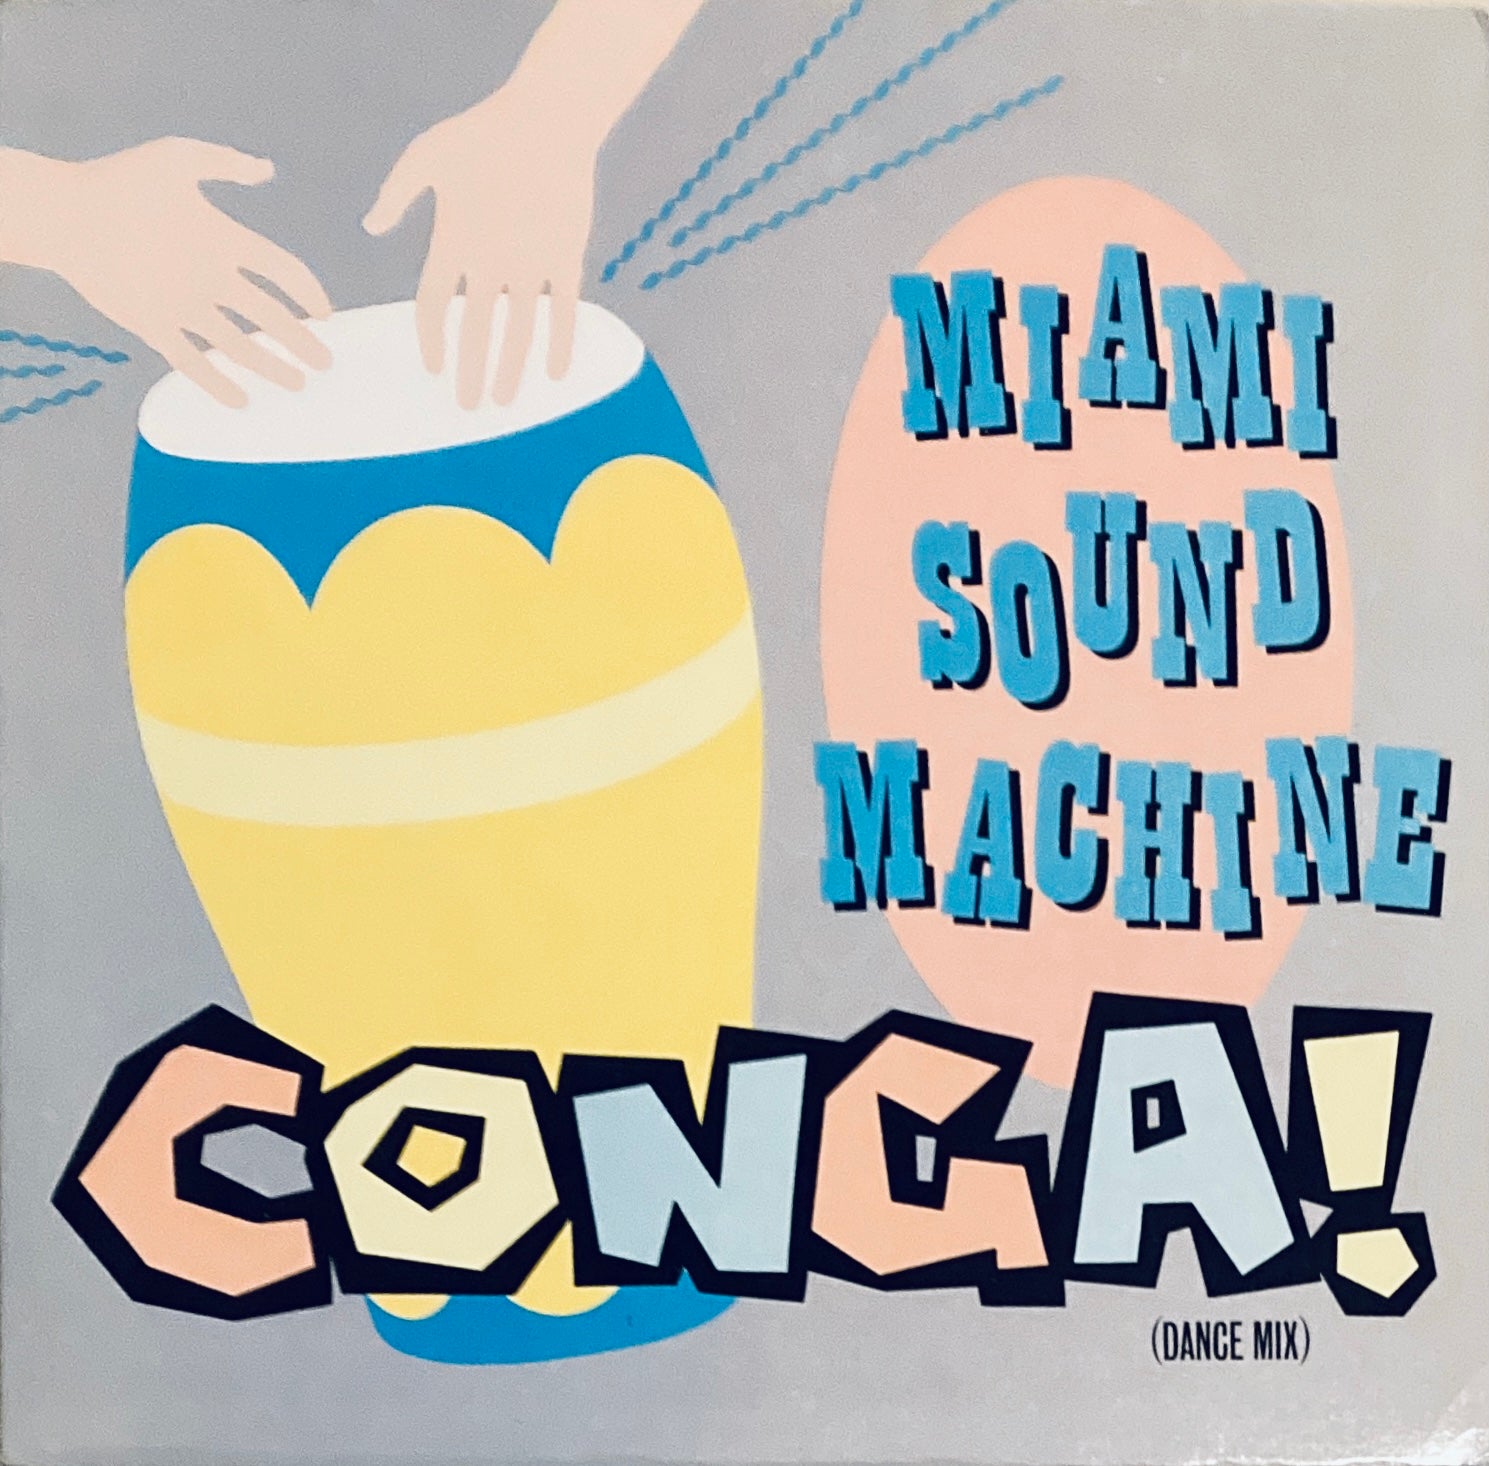 Miami Sound Machine "Conga!" 12" Single (1985)